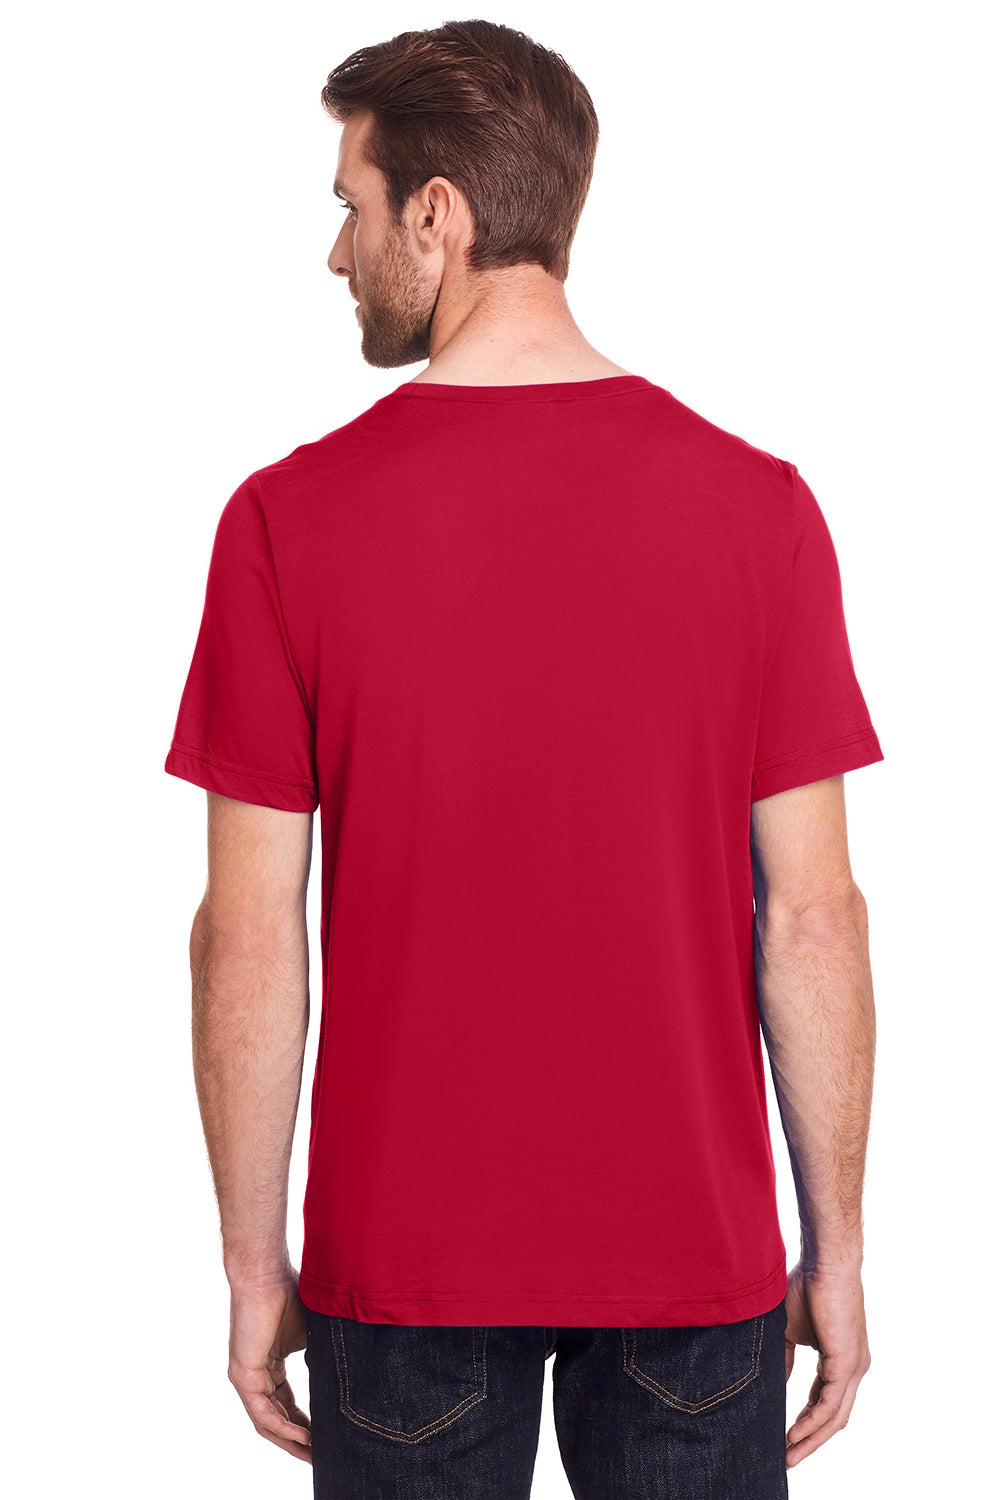 Core 365 CE111 Mens Fusion ChromaSoft Performance Moisture Wicking Short Sleeve Crewneck T-Shirt Red Back